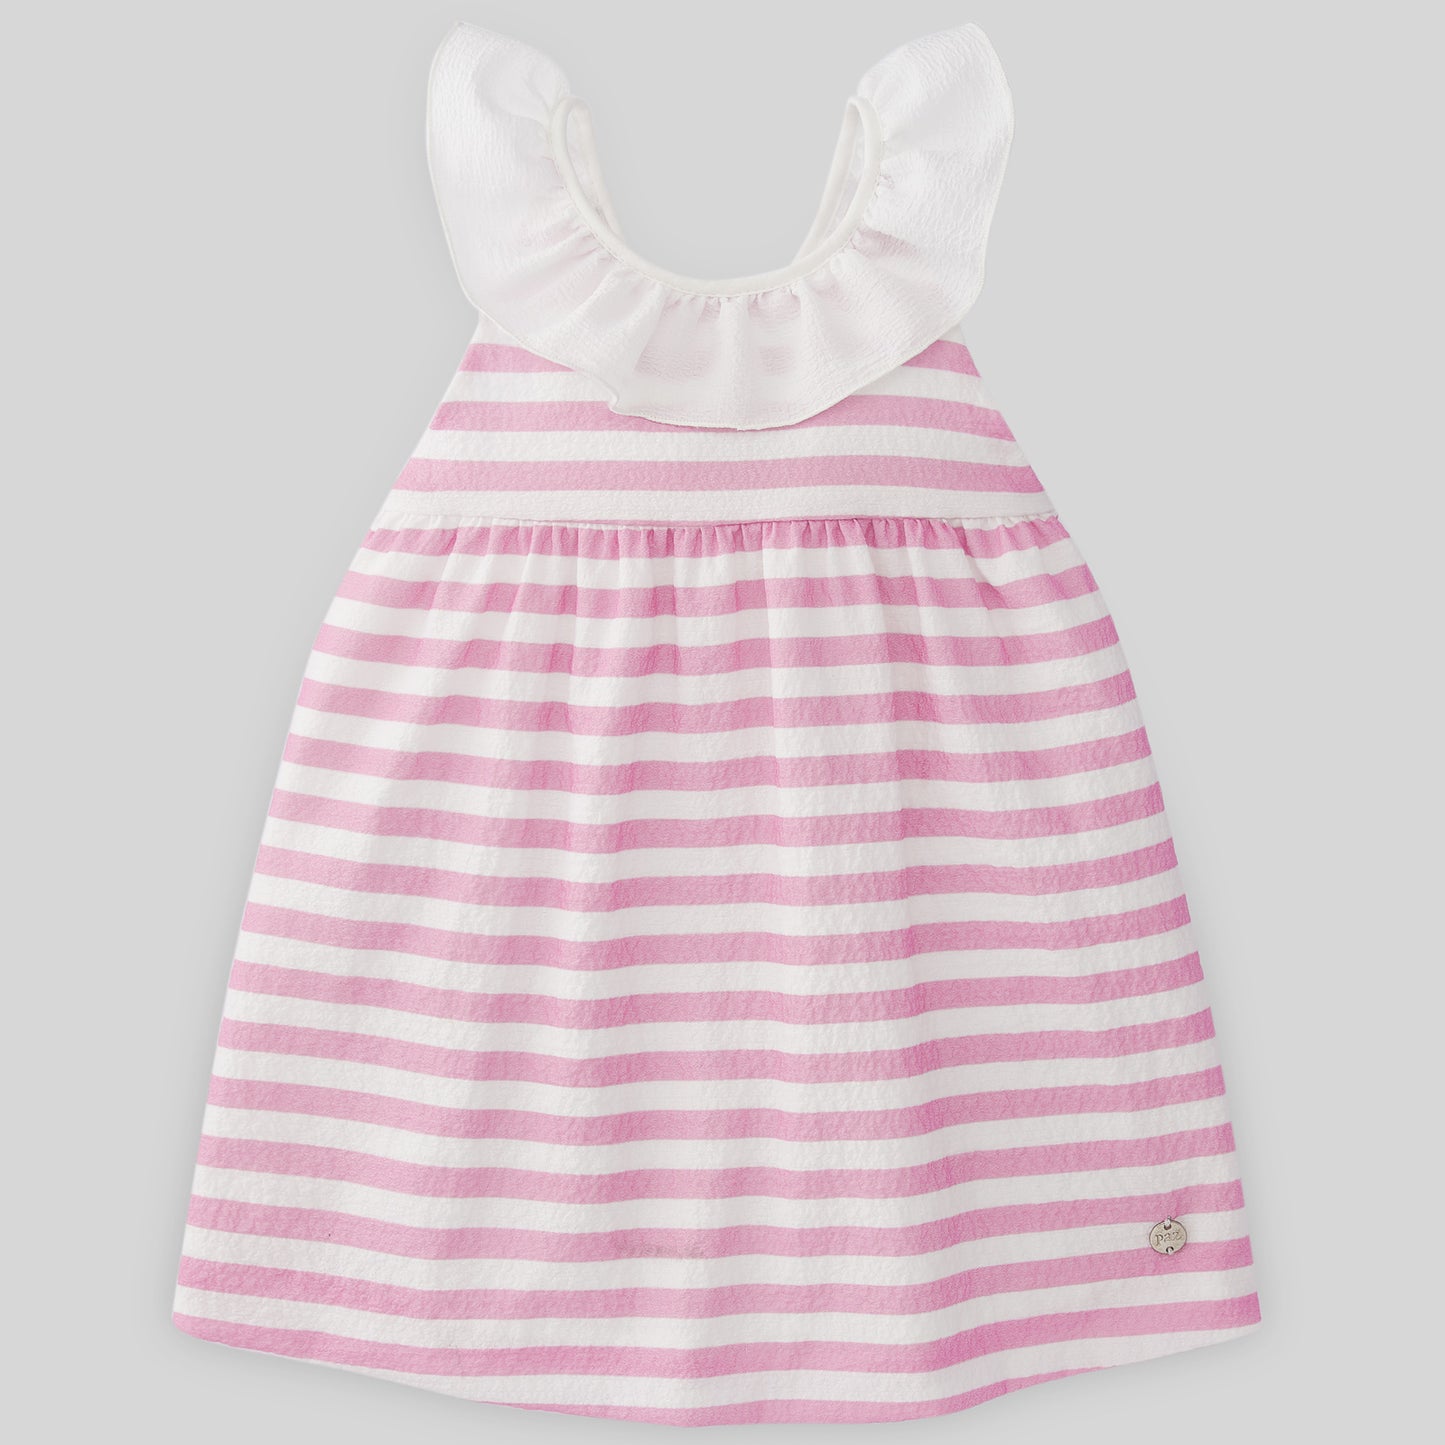 PAZ RODRIGUEZ White-pink striped dress